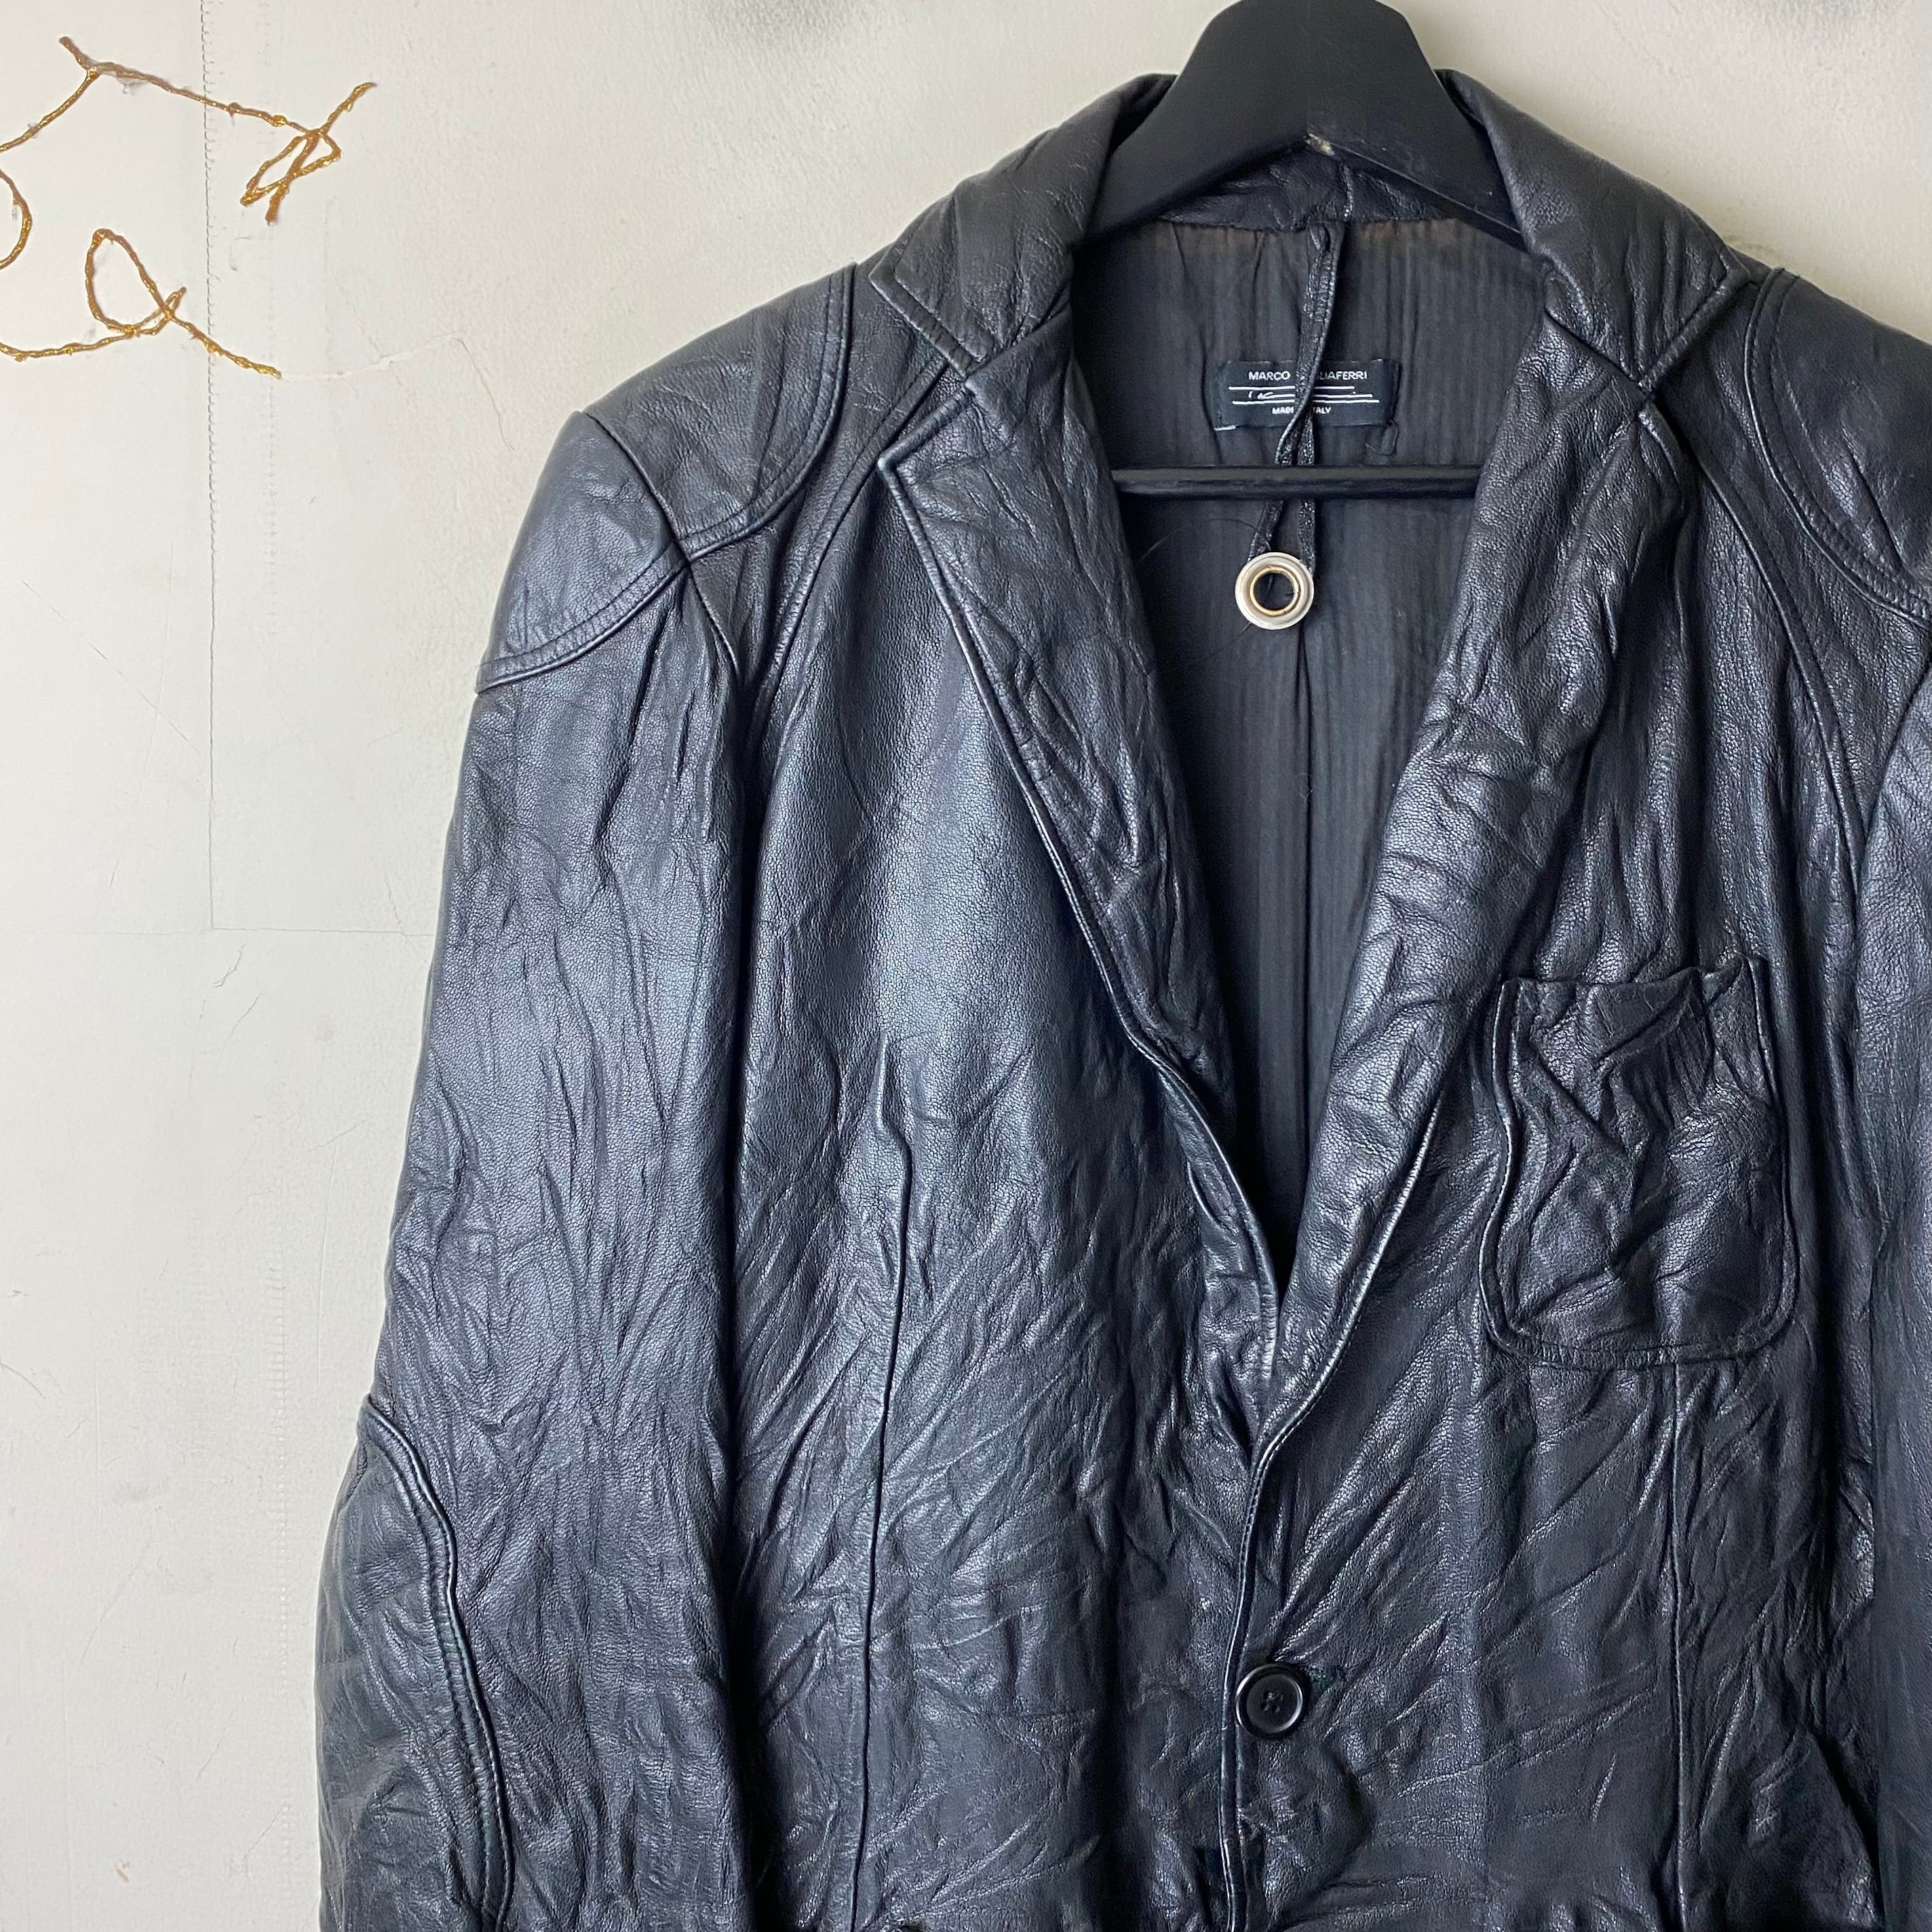 MARCO TAGLIAFERRI black leather tailored jacket | NOIR ONLINE